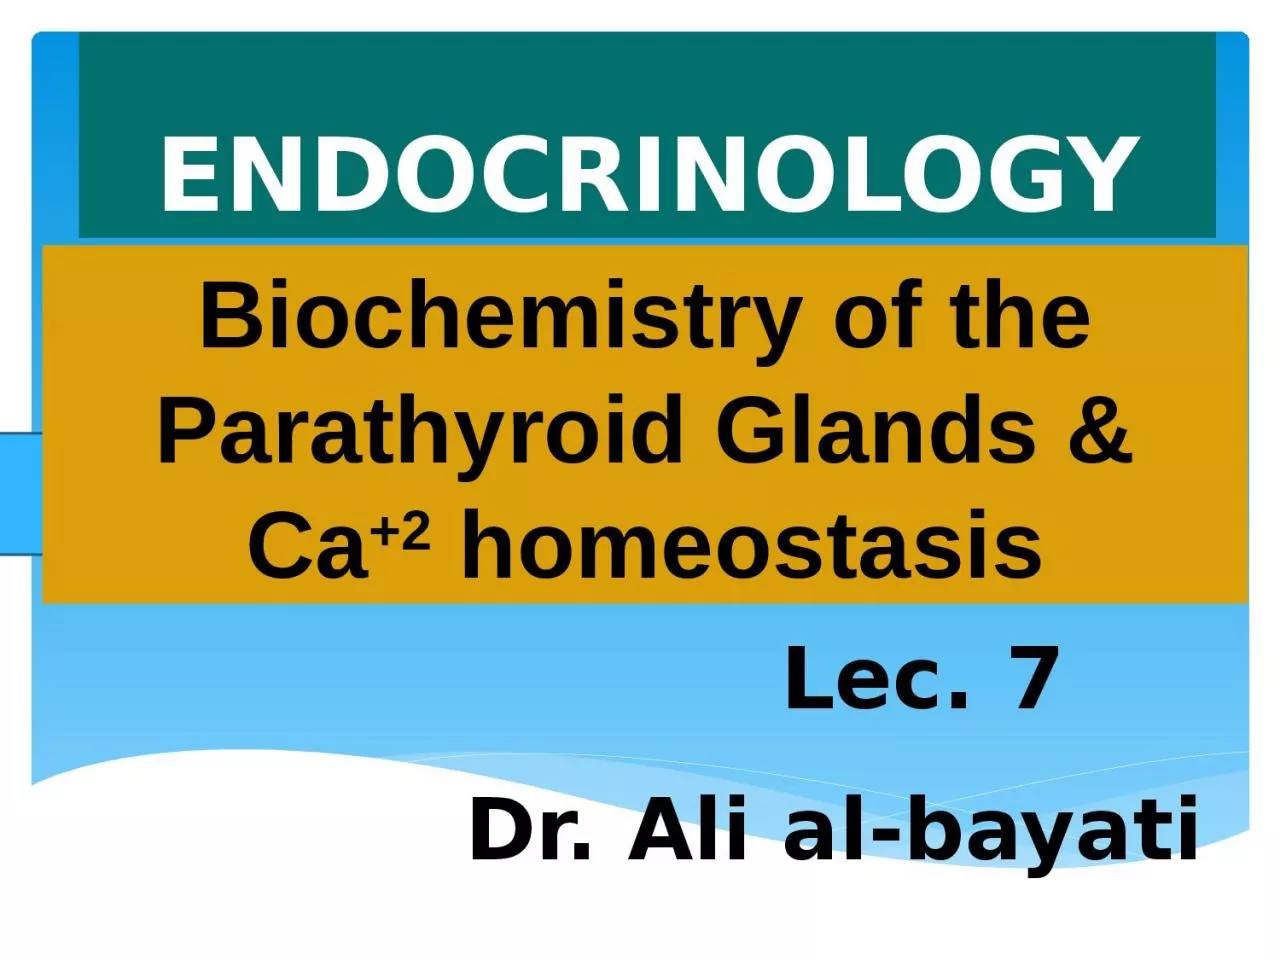 ENDOCRINOLOGY Lec.  7 Dr. Ali al-bayati